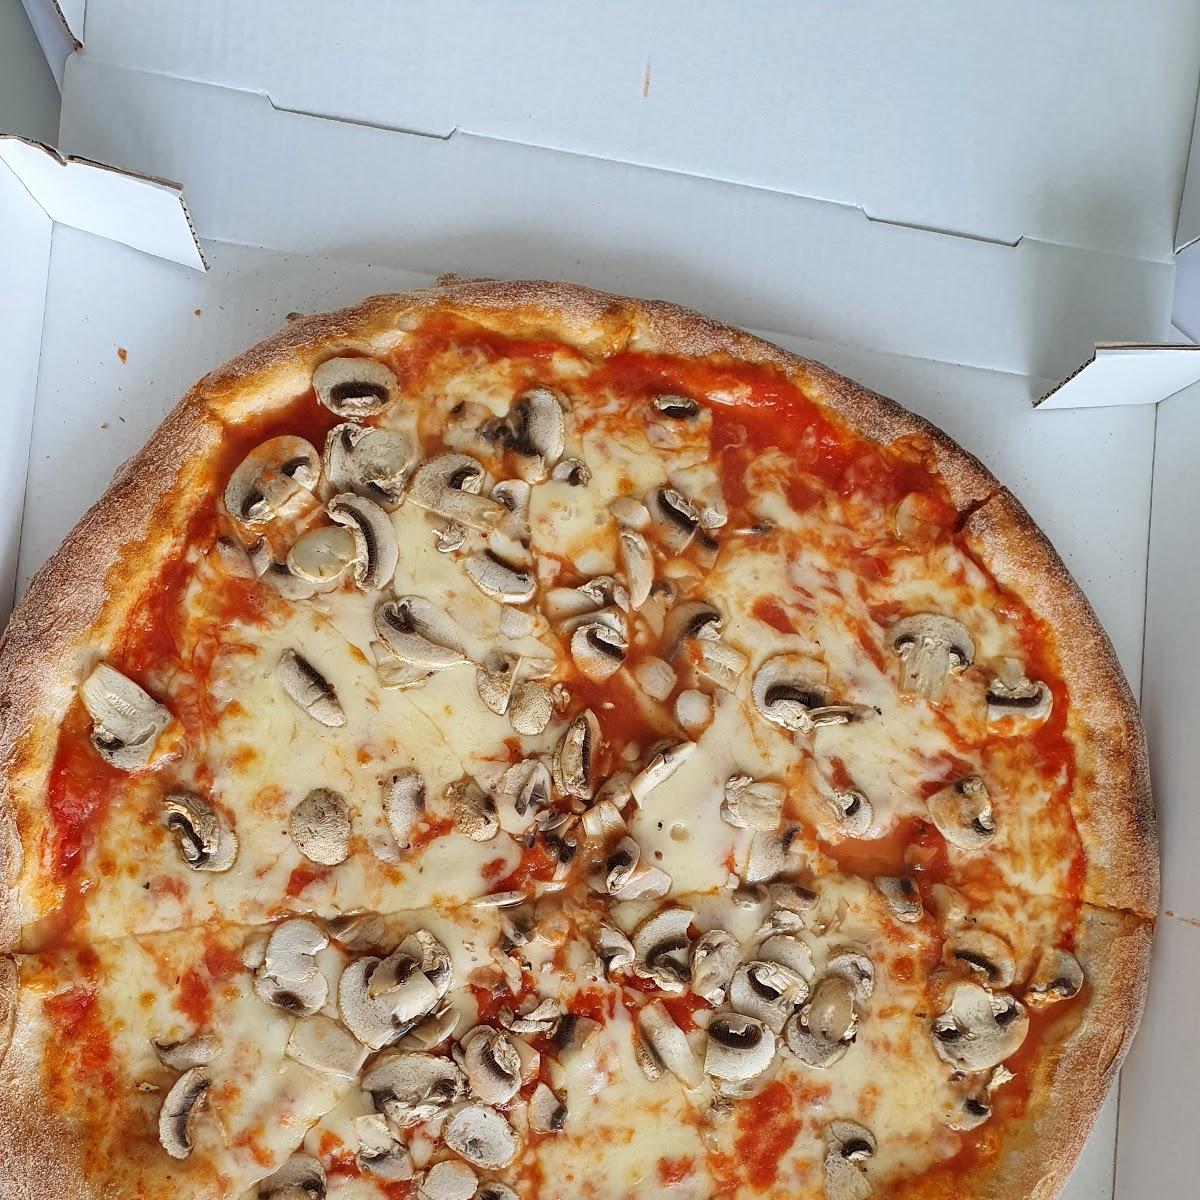 Restaurant "Pacha Pizza by silvio" in München